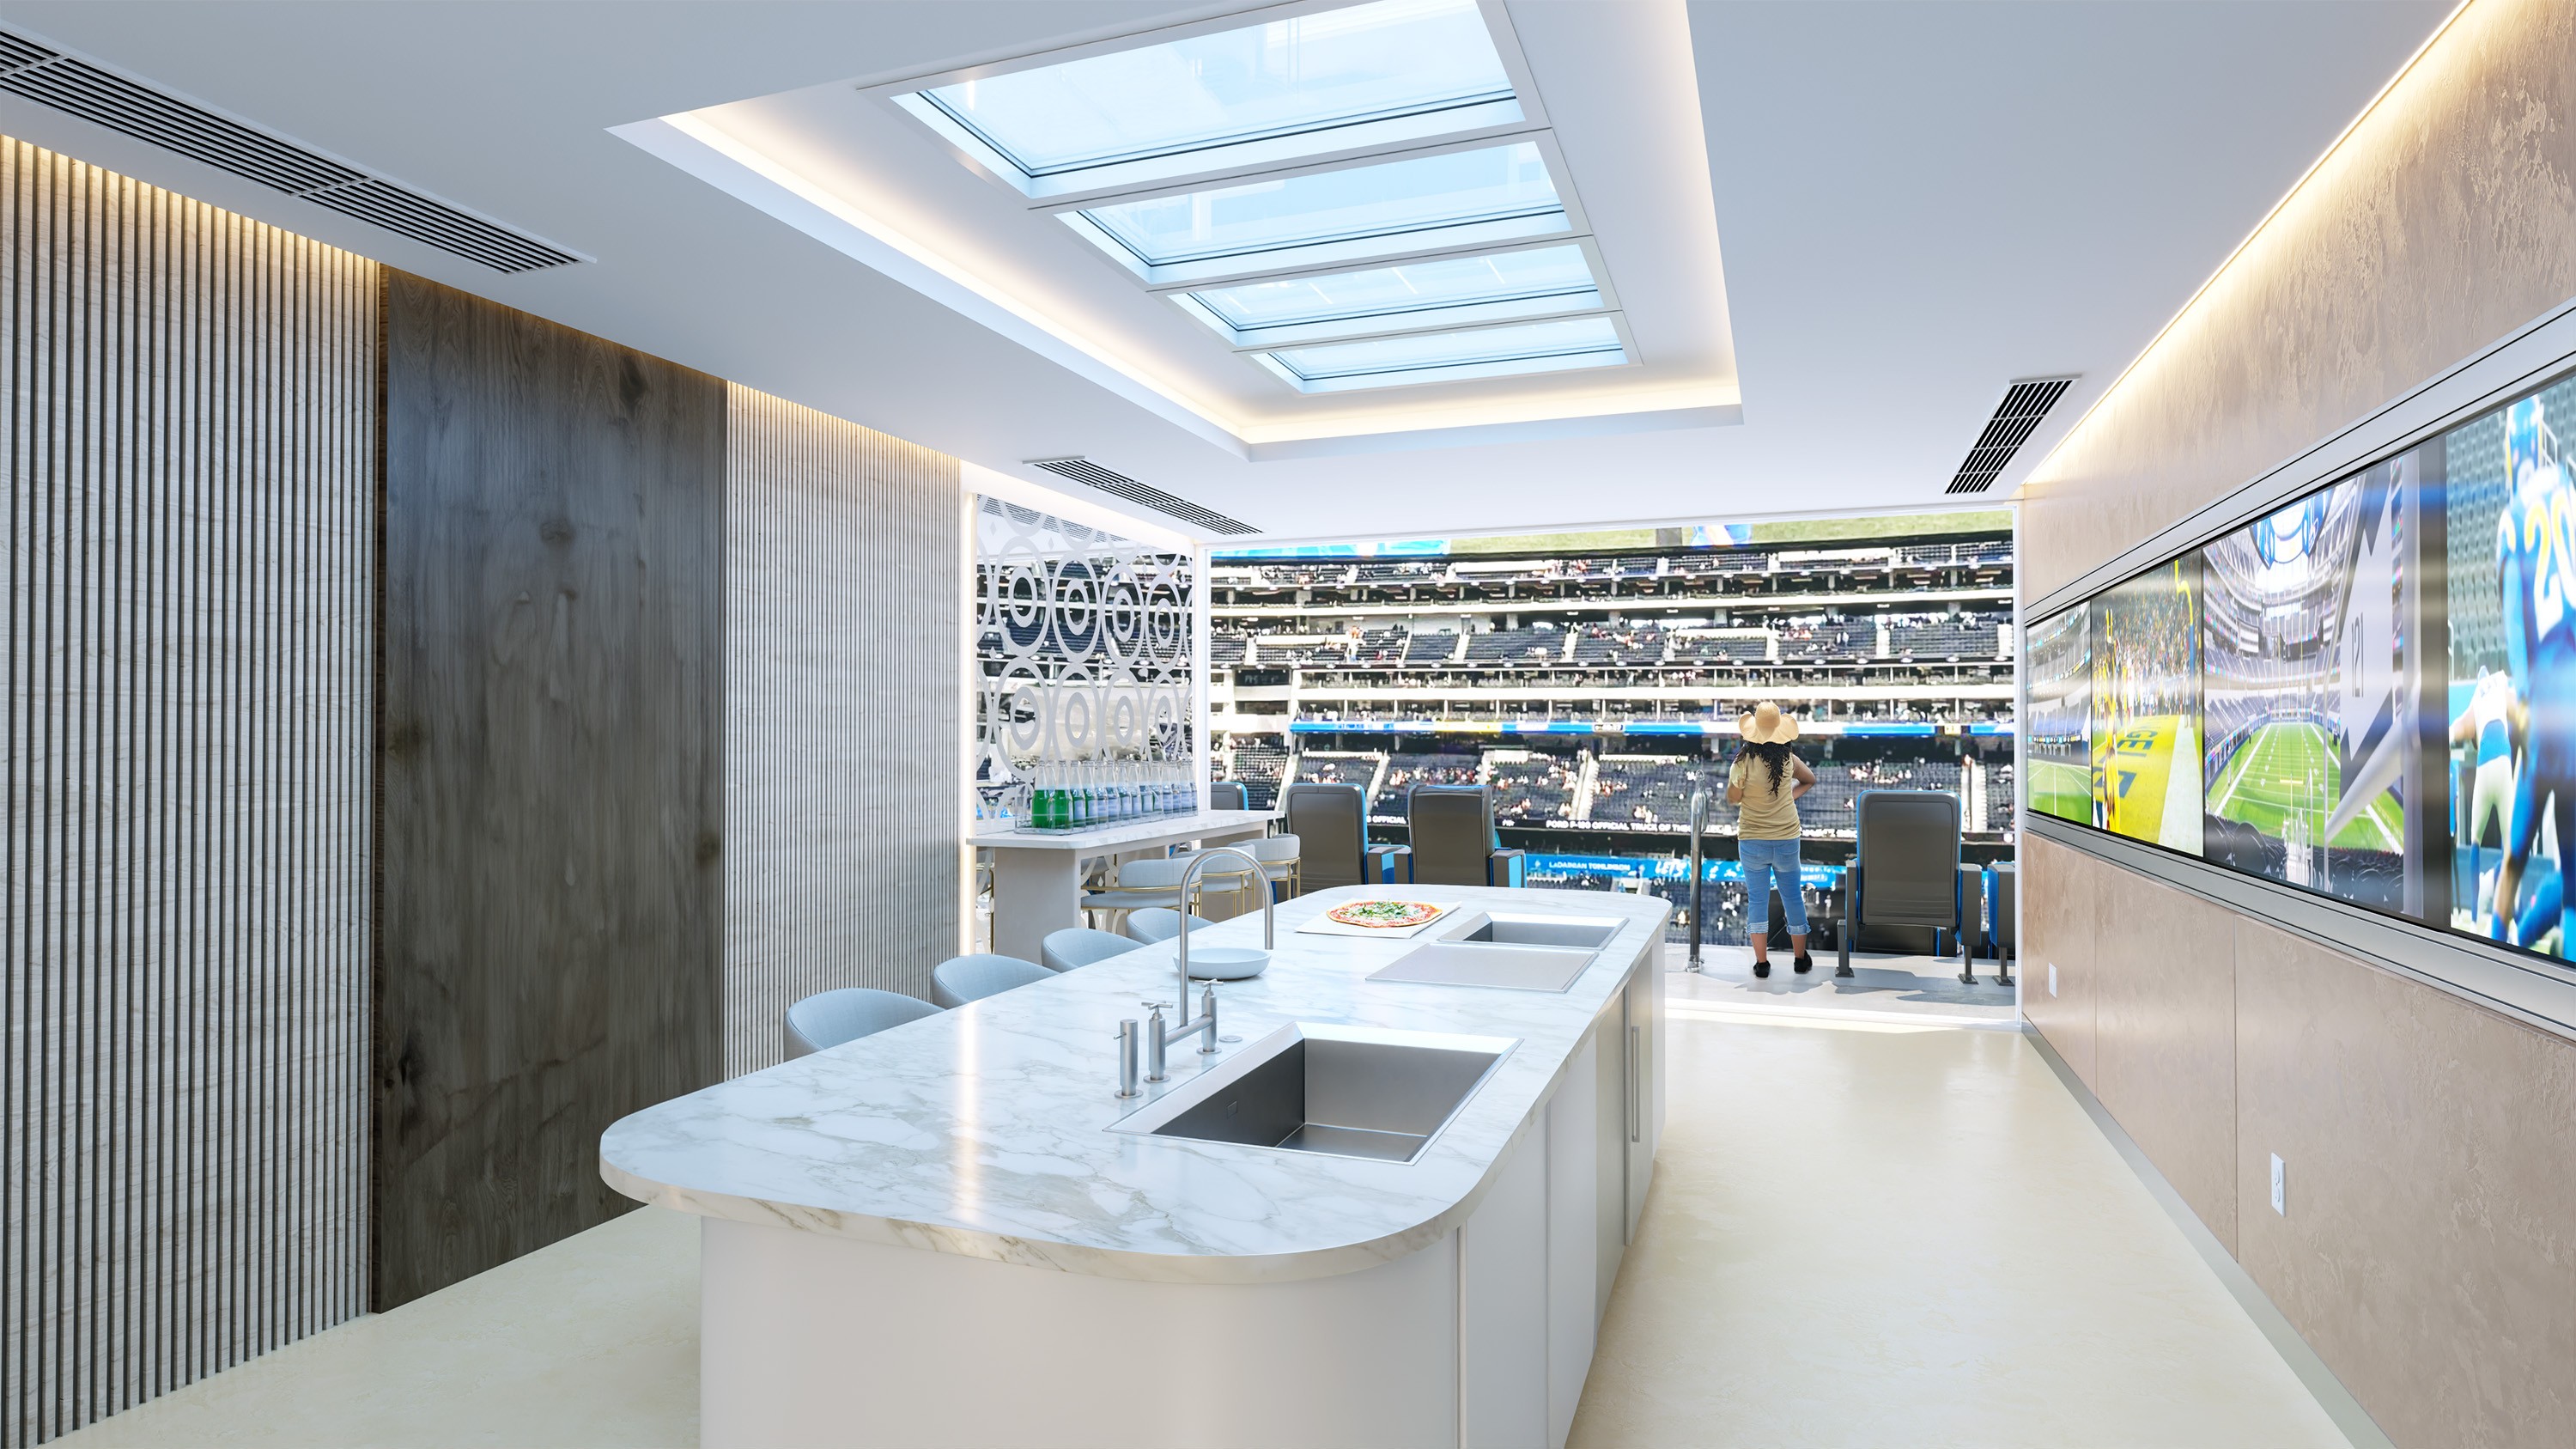 Innerscene 2x4 Circadian Sky installed in VIP Suite at stadium